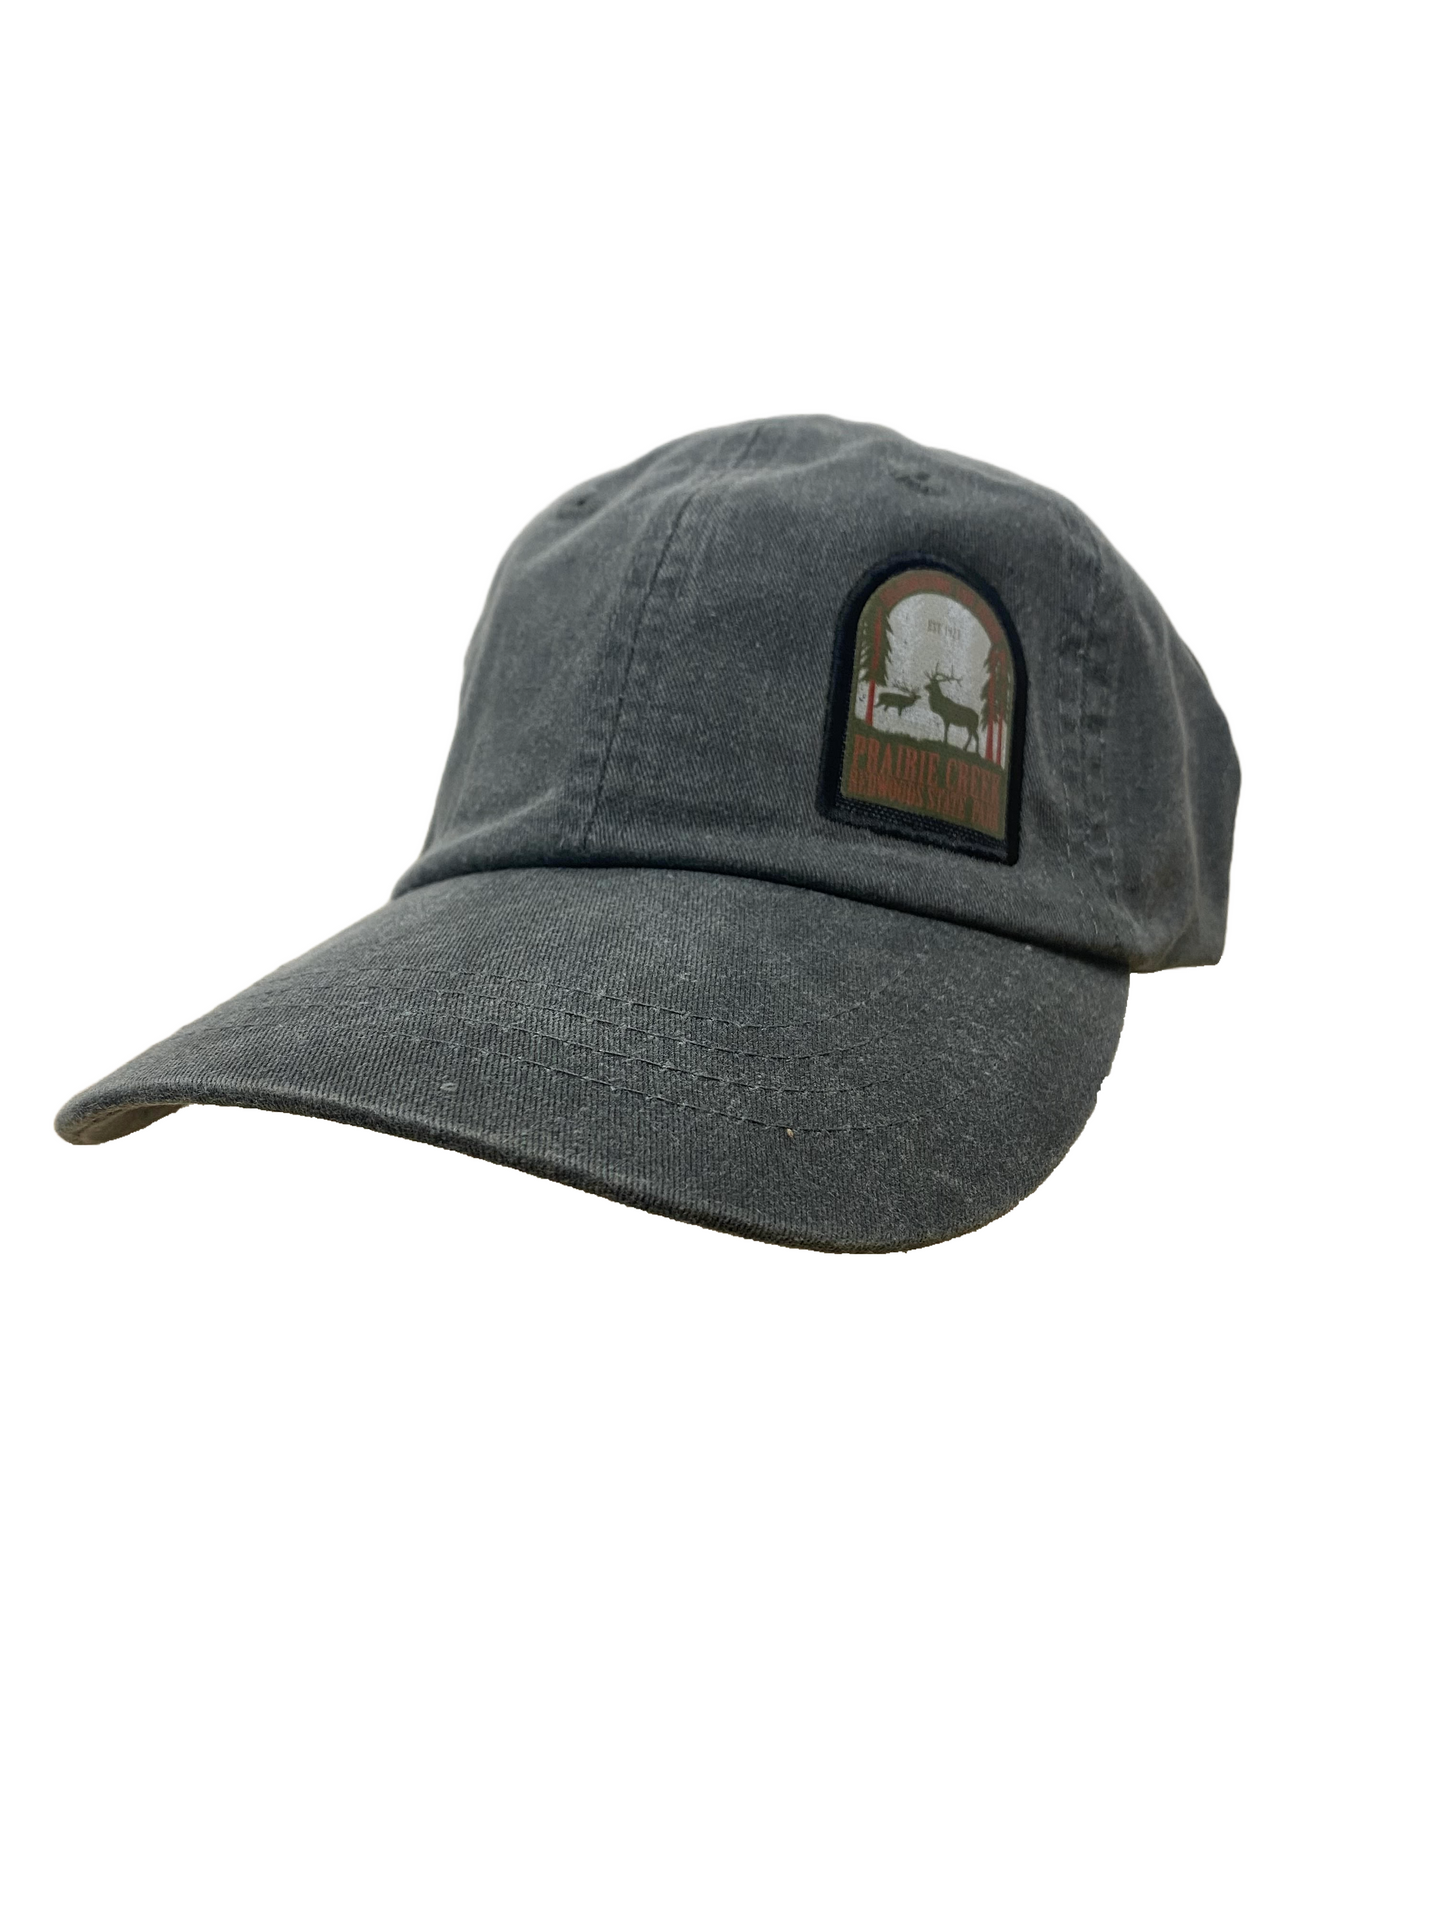 Prairie Creek Centennial Hat - Dark Gray